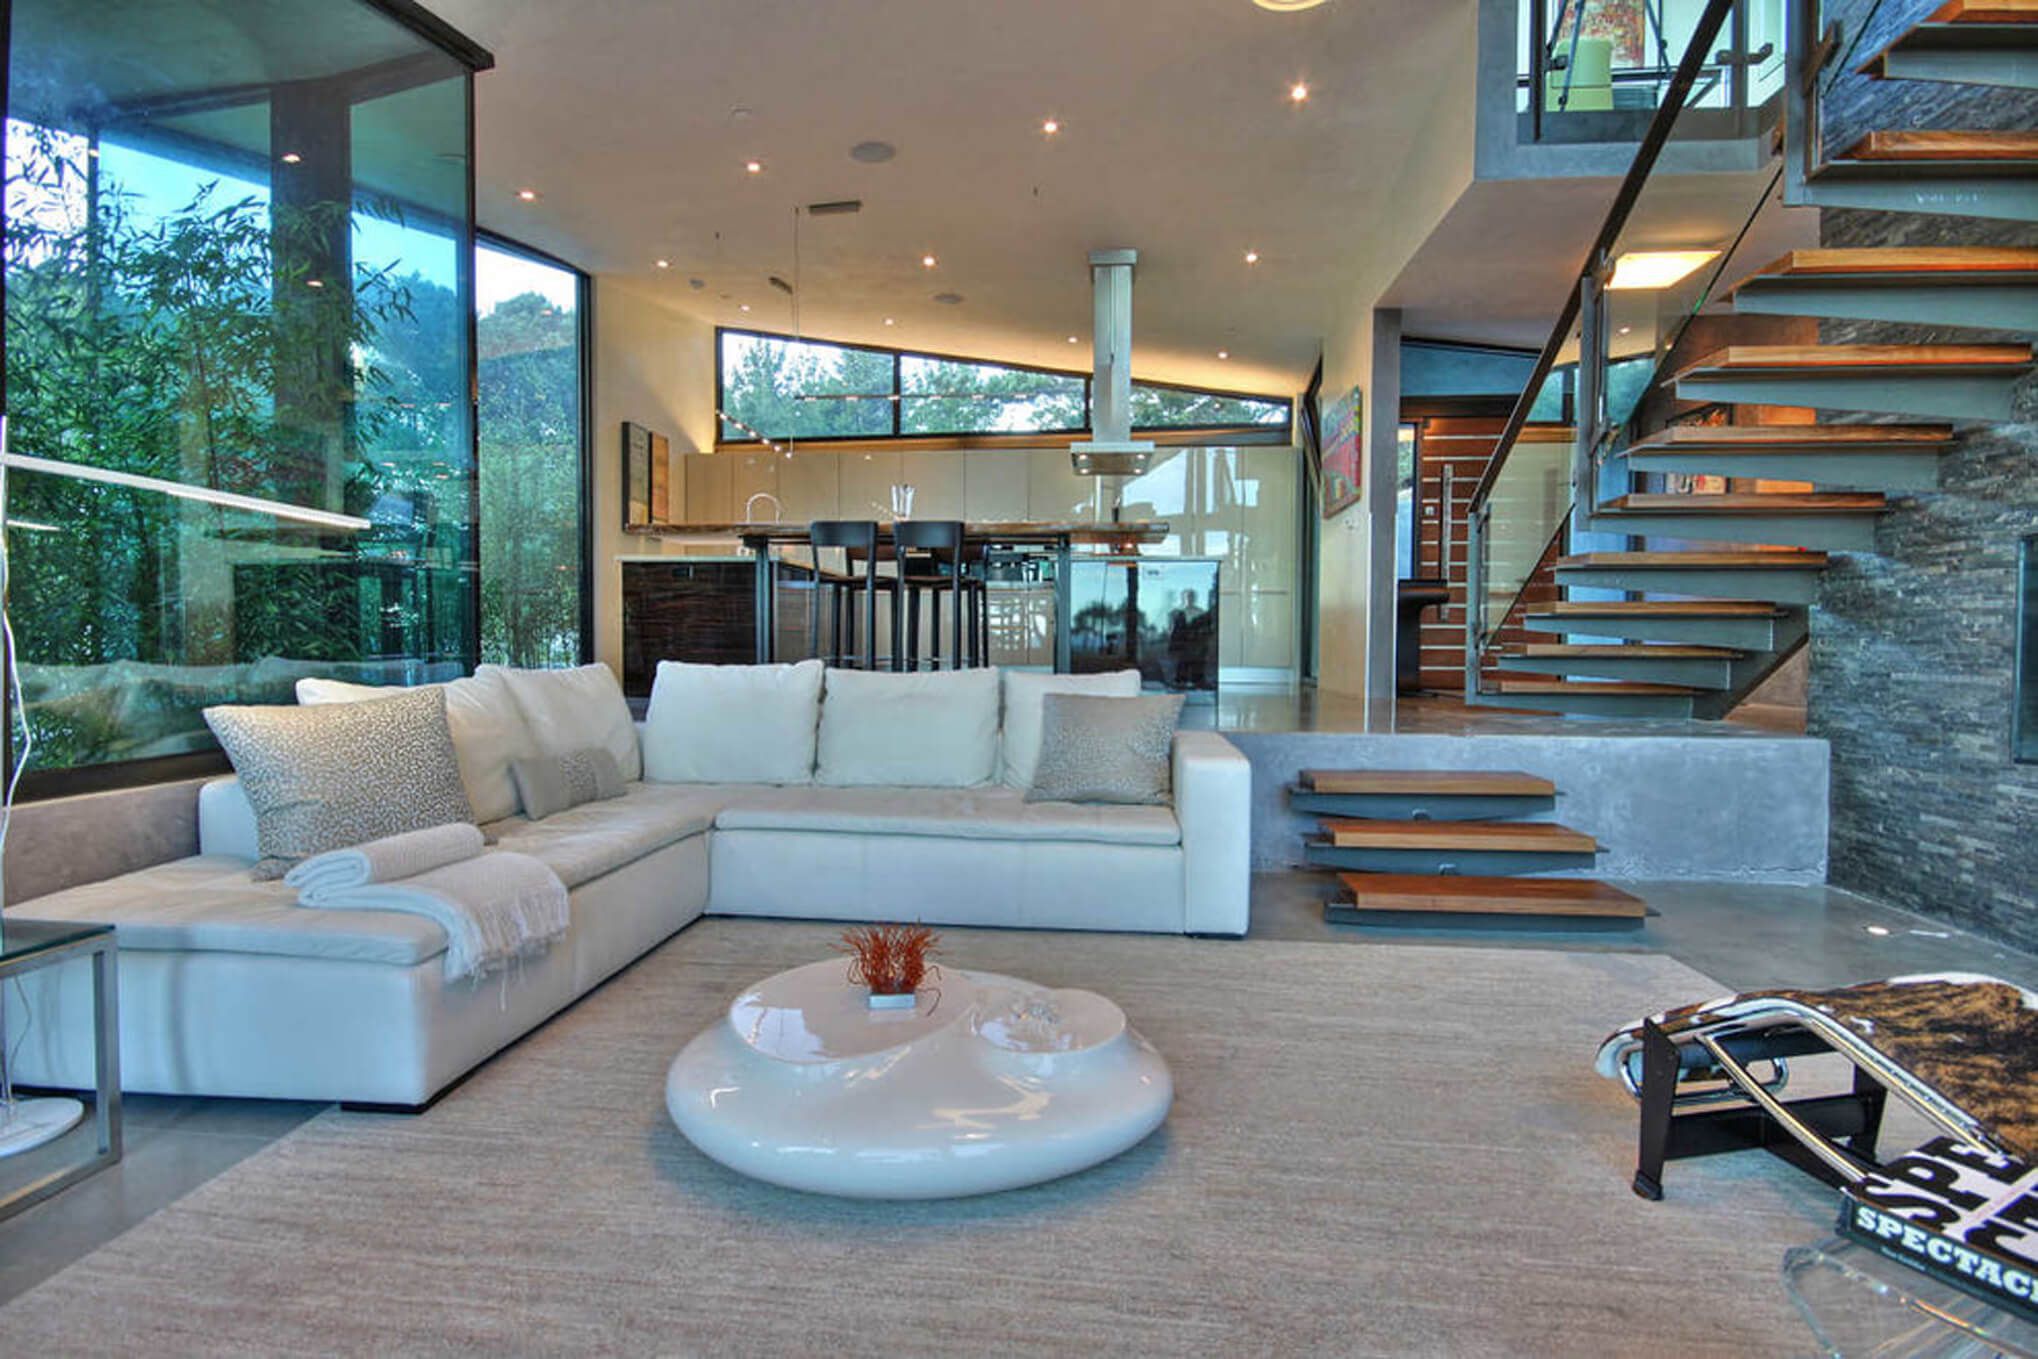 Modern and contemporary living room by Interior Designer, RM Interiors of Cincinnati, Ohio.